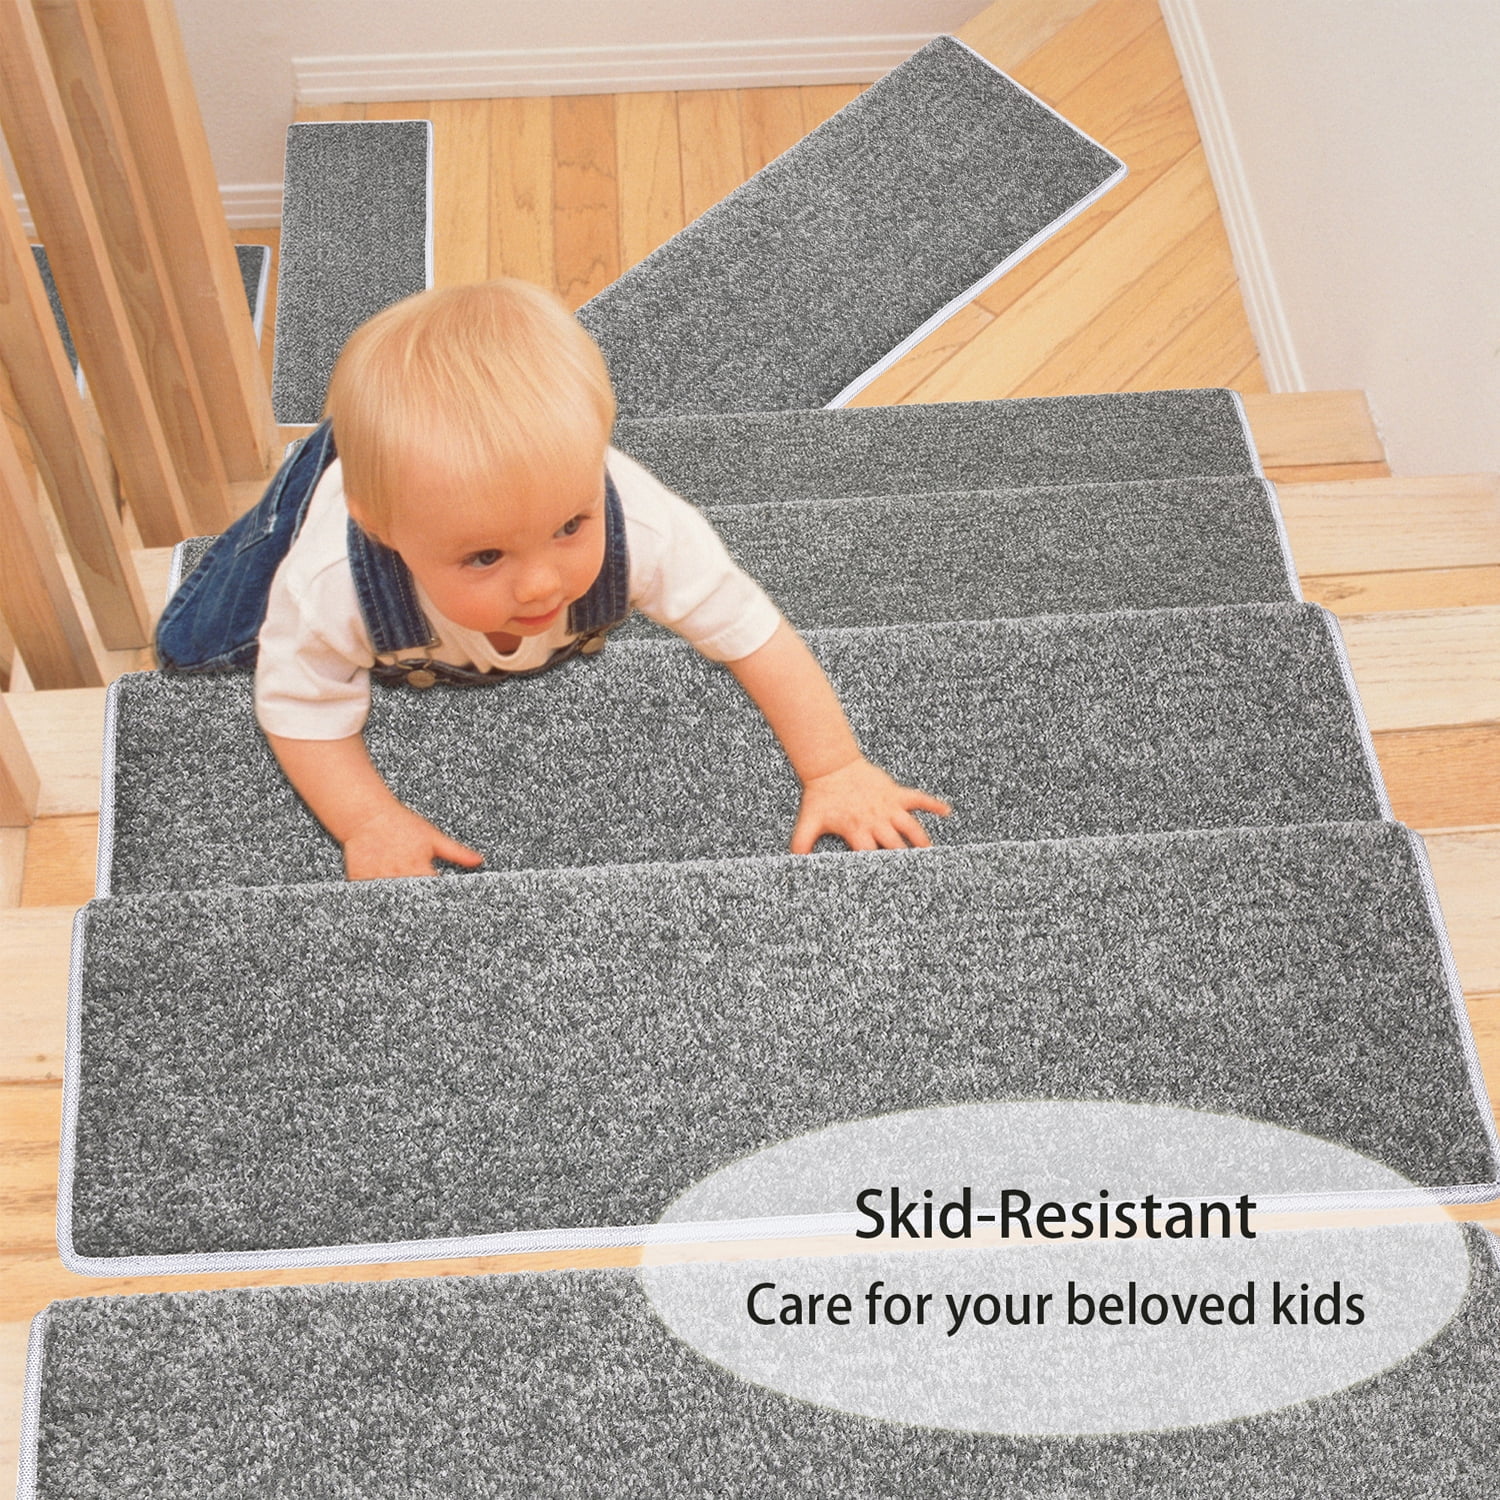 ANTI SKID Stainmaster Petprotect Carpet PADS: Reusable PU Non Slip